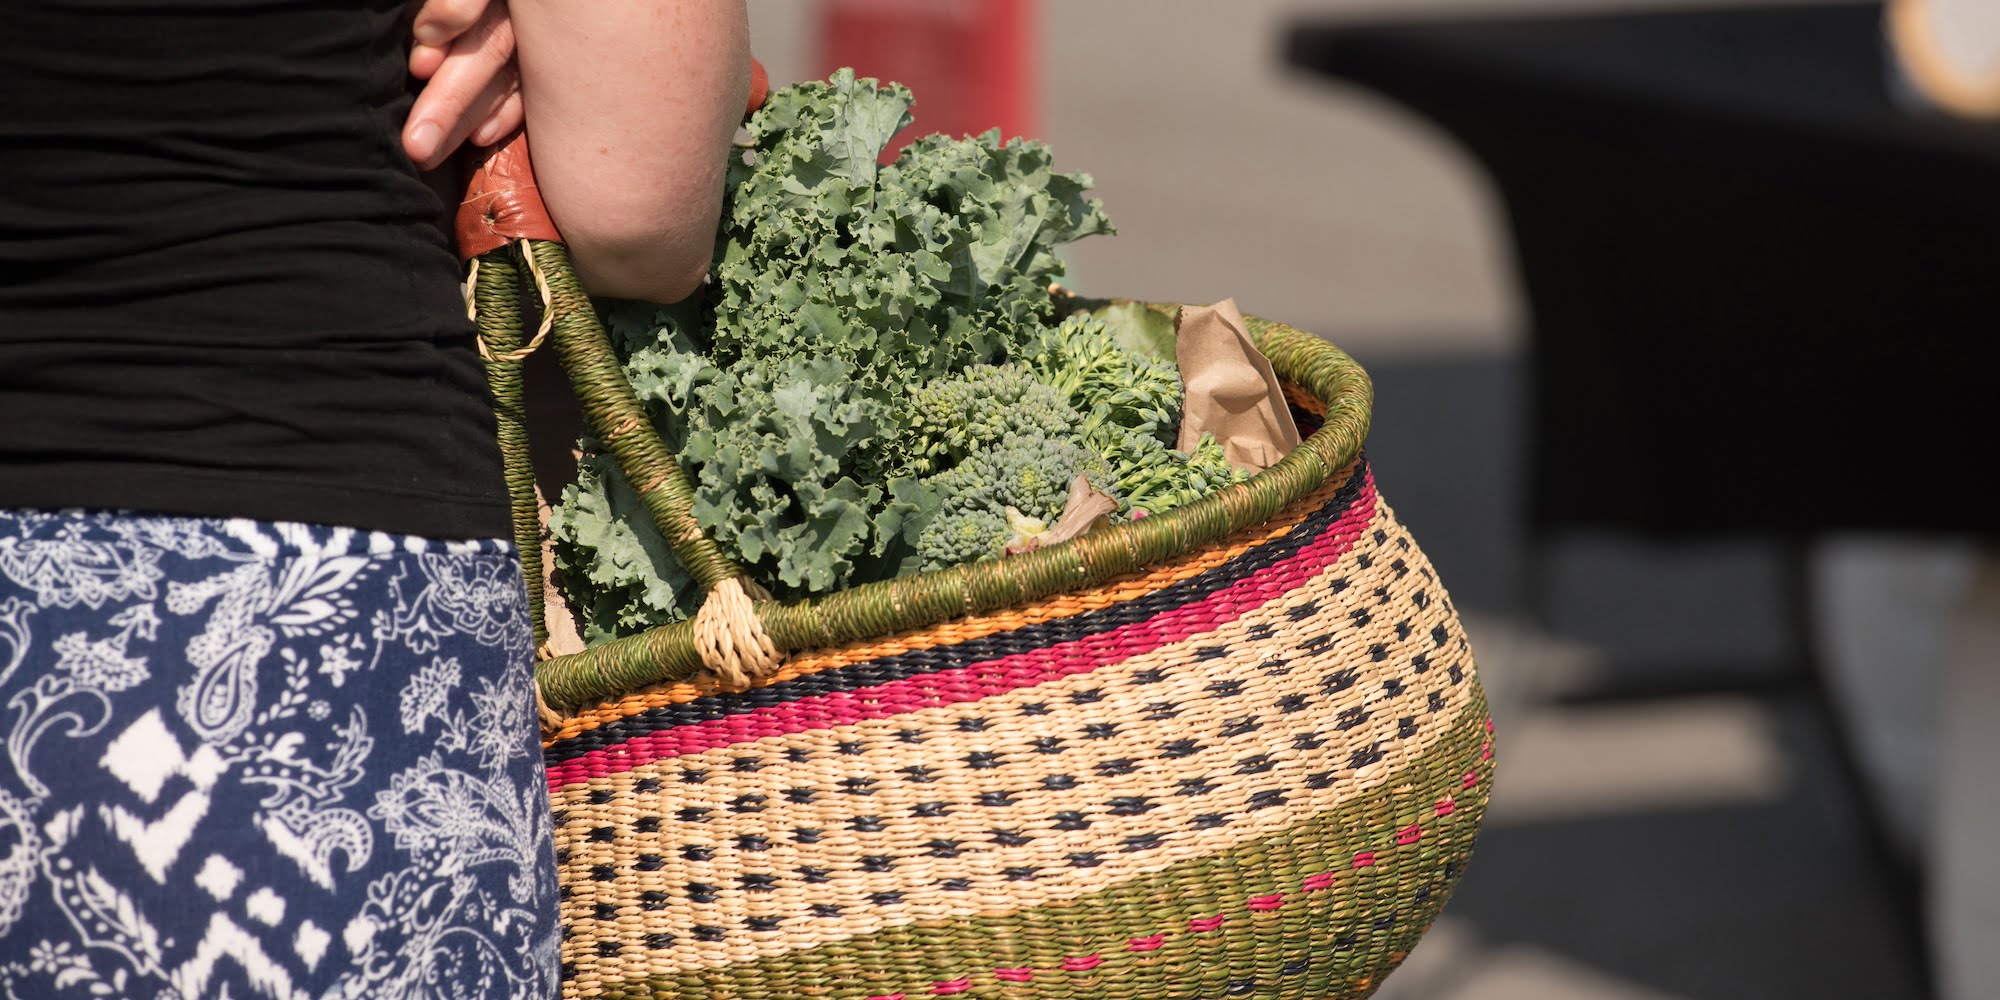 greens in a market basket